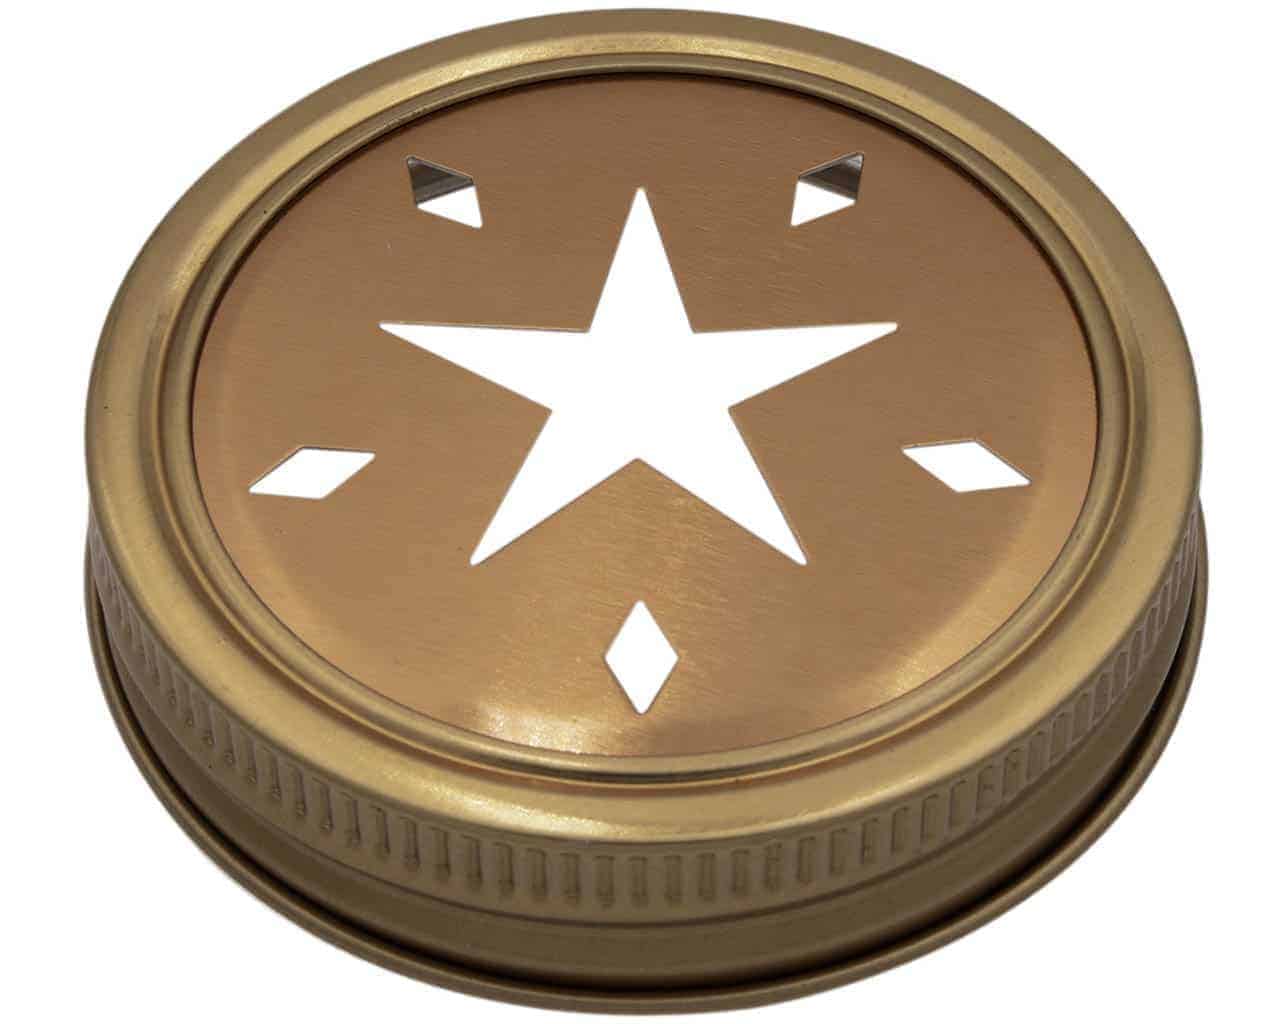 Mason Jar Lifestyle Copper star cutout lid and band for regular mouth Mason jars